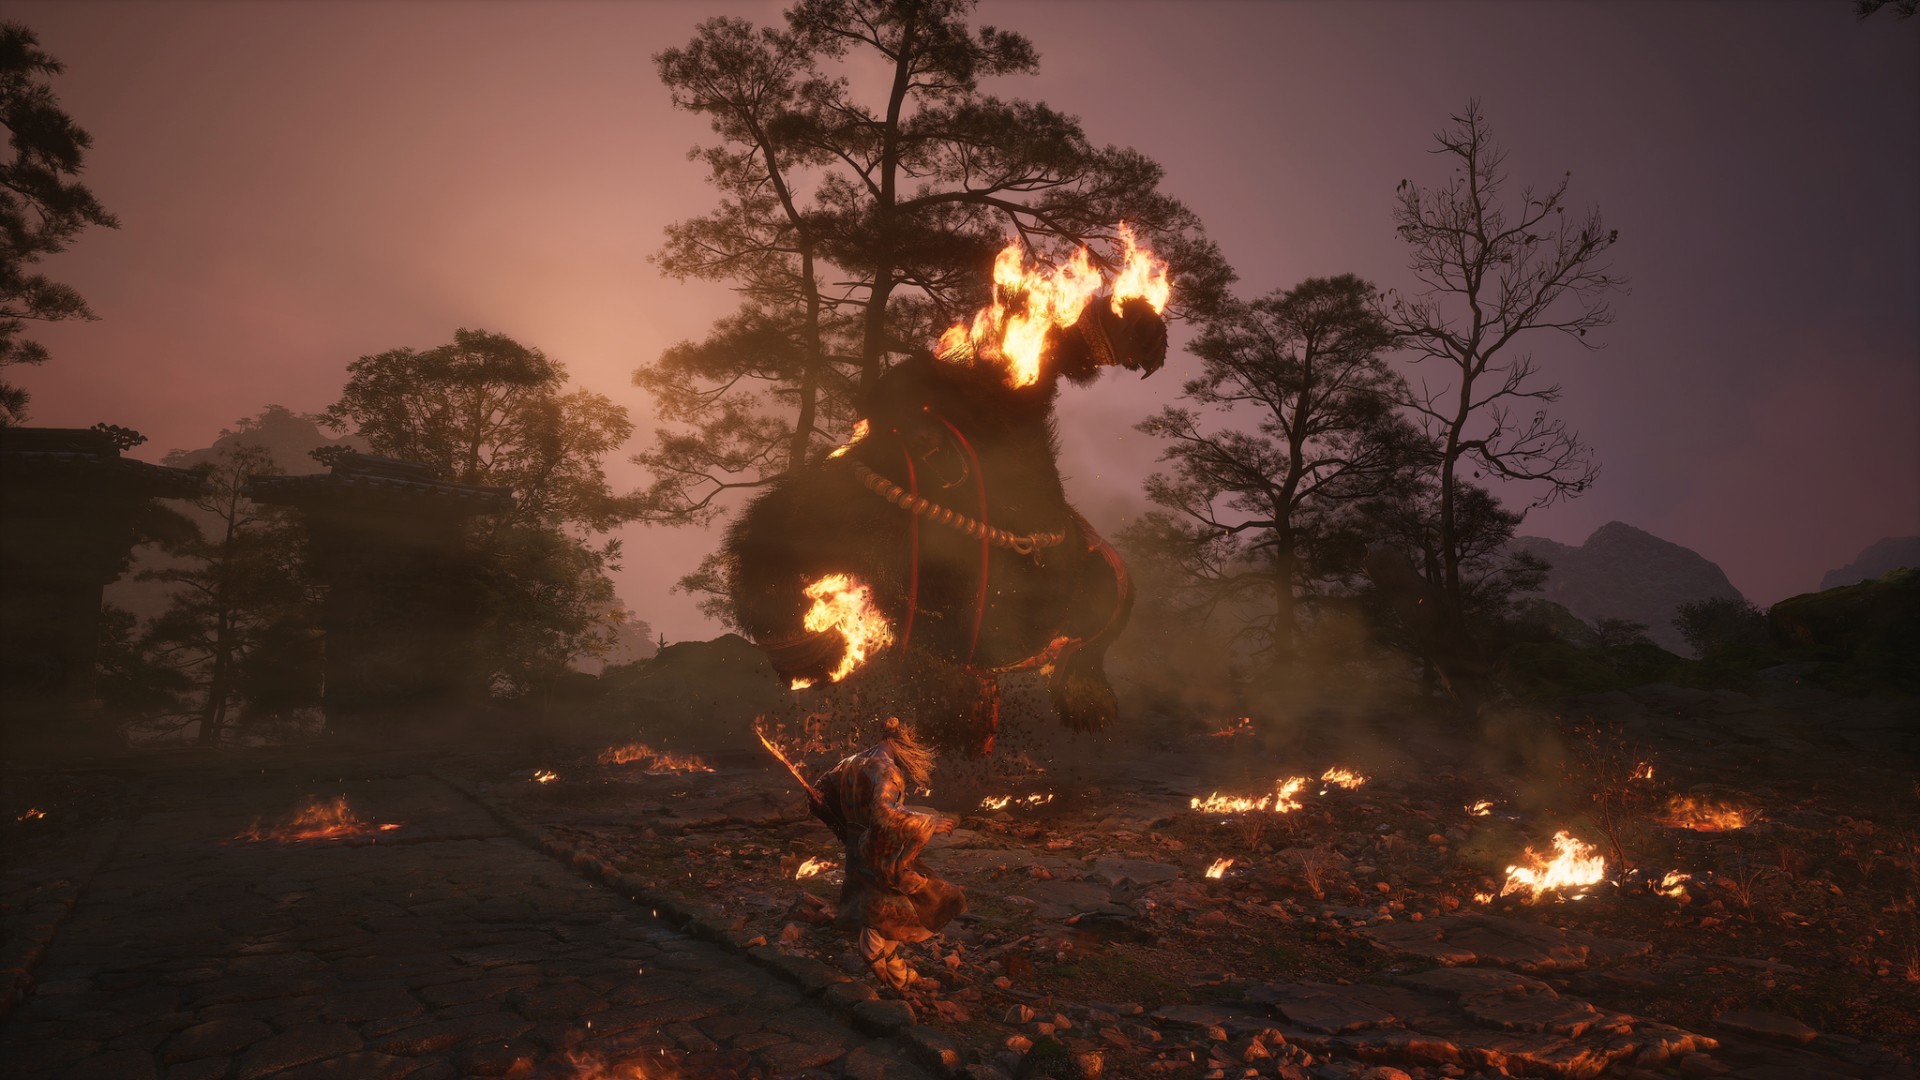 Black Myth Wukong ön izlemesi: Wukong dev alevli ayı boss'uyla savaşıyor.